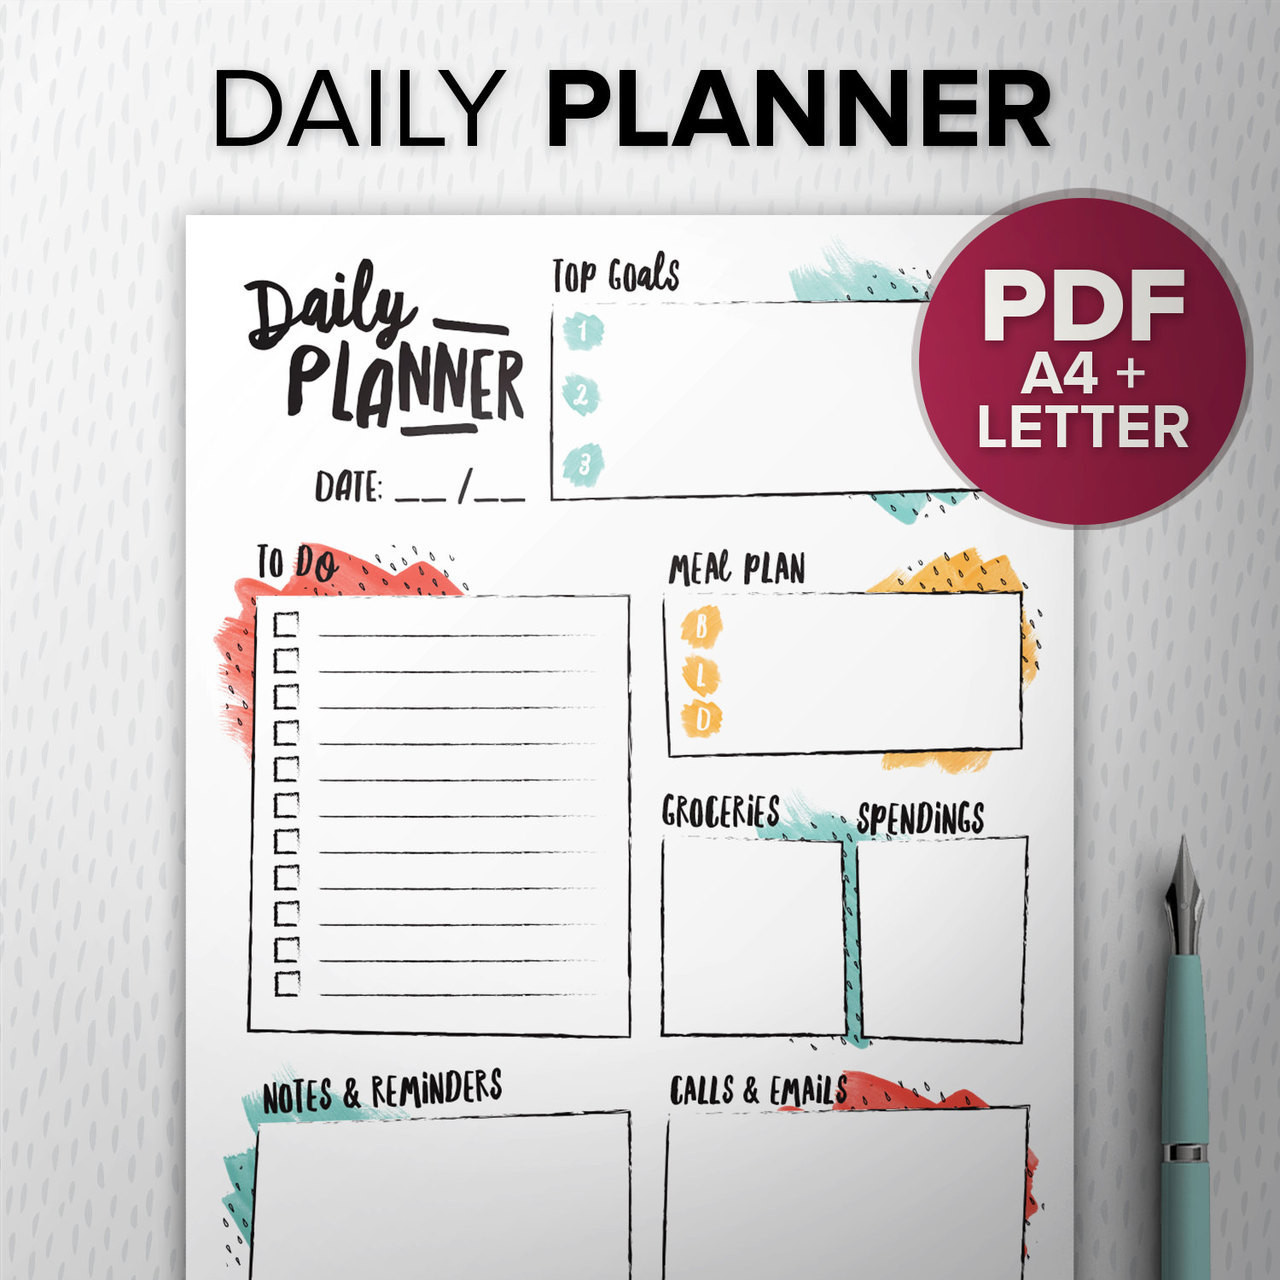 To do one s best. Daily Planner. Планер to do list. Креативный планер. Планер pdf.